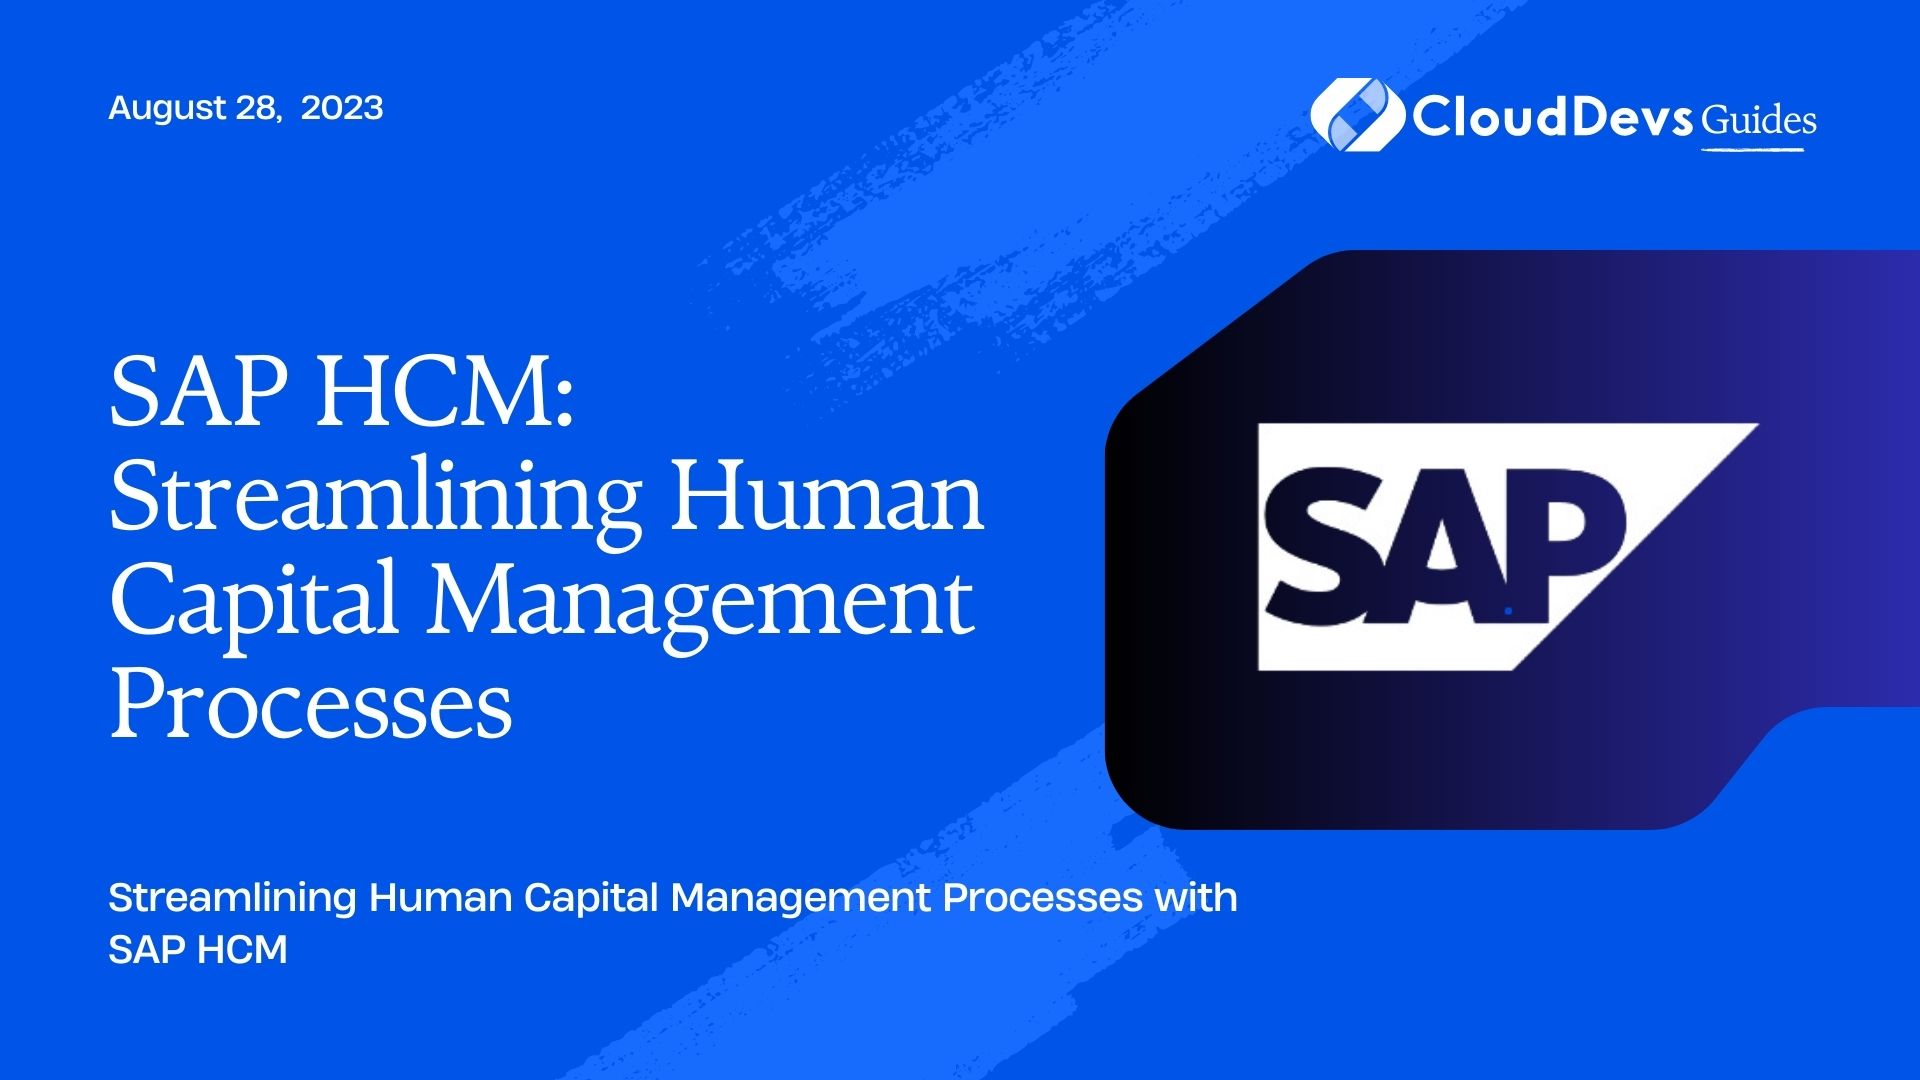 SAP HCM: Streamlining Human Capital Management Processes